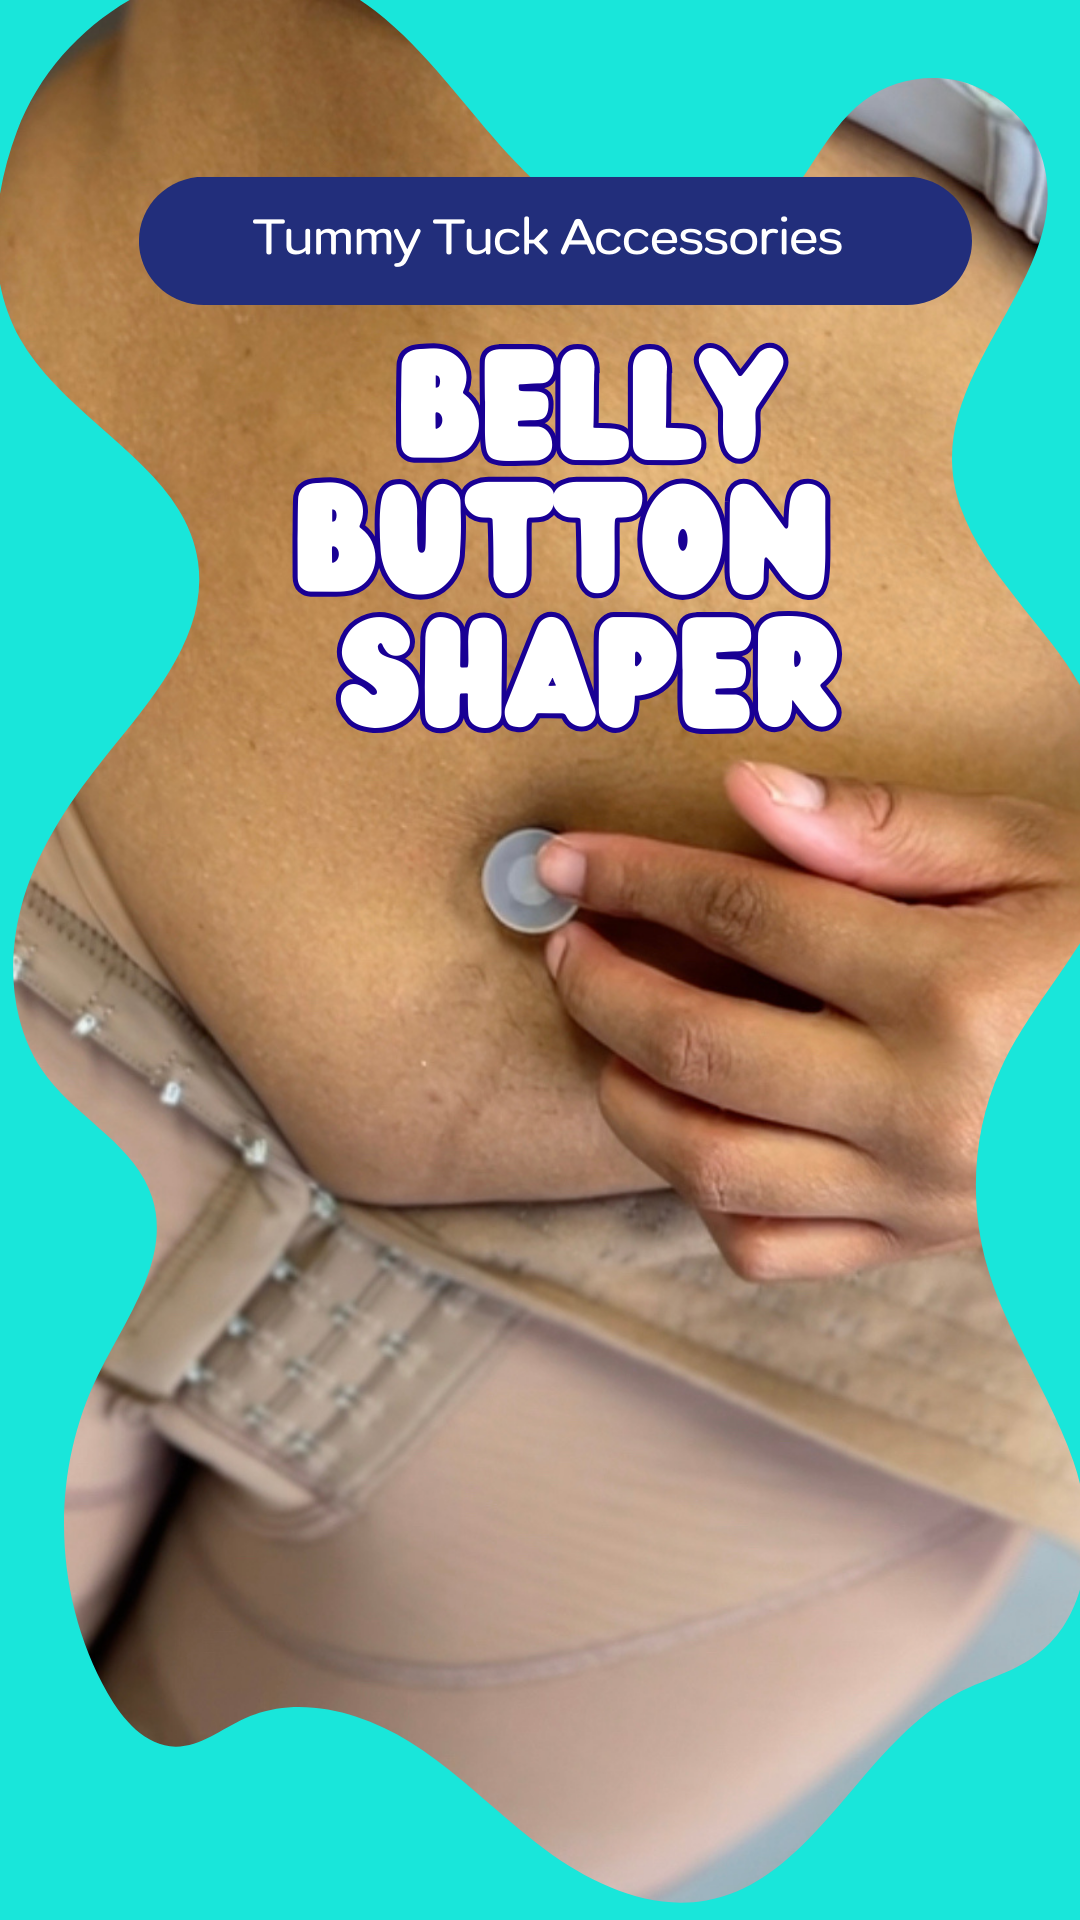 Belly Button Shaper